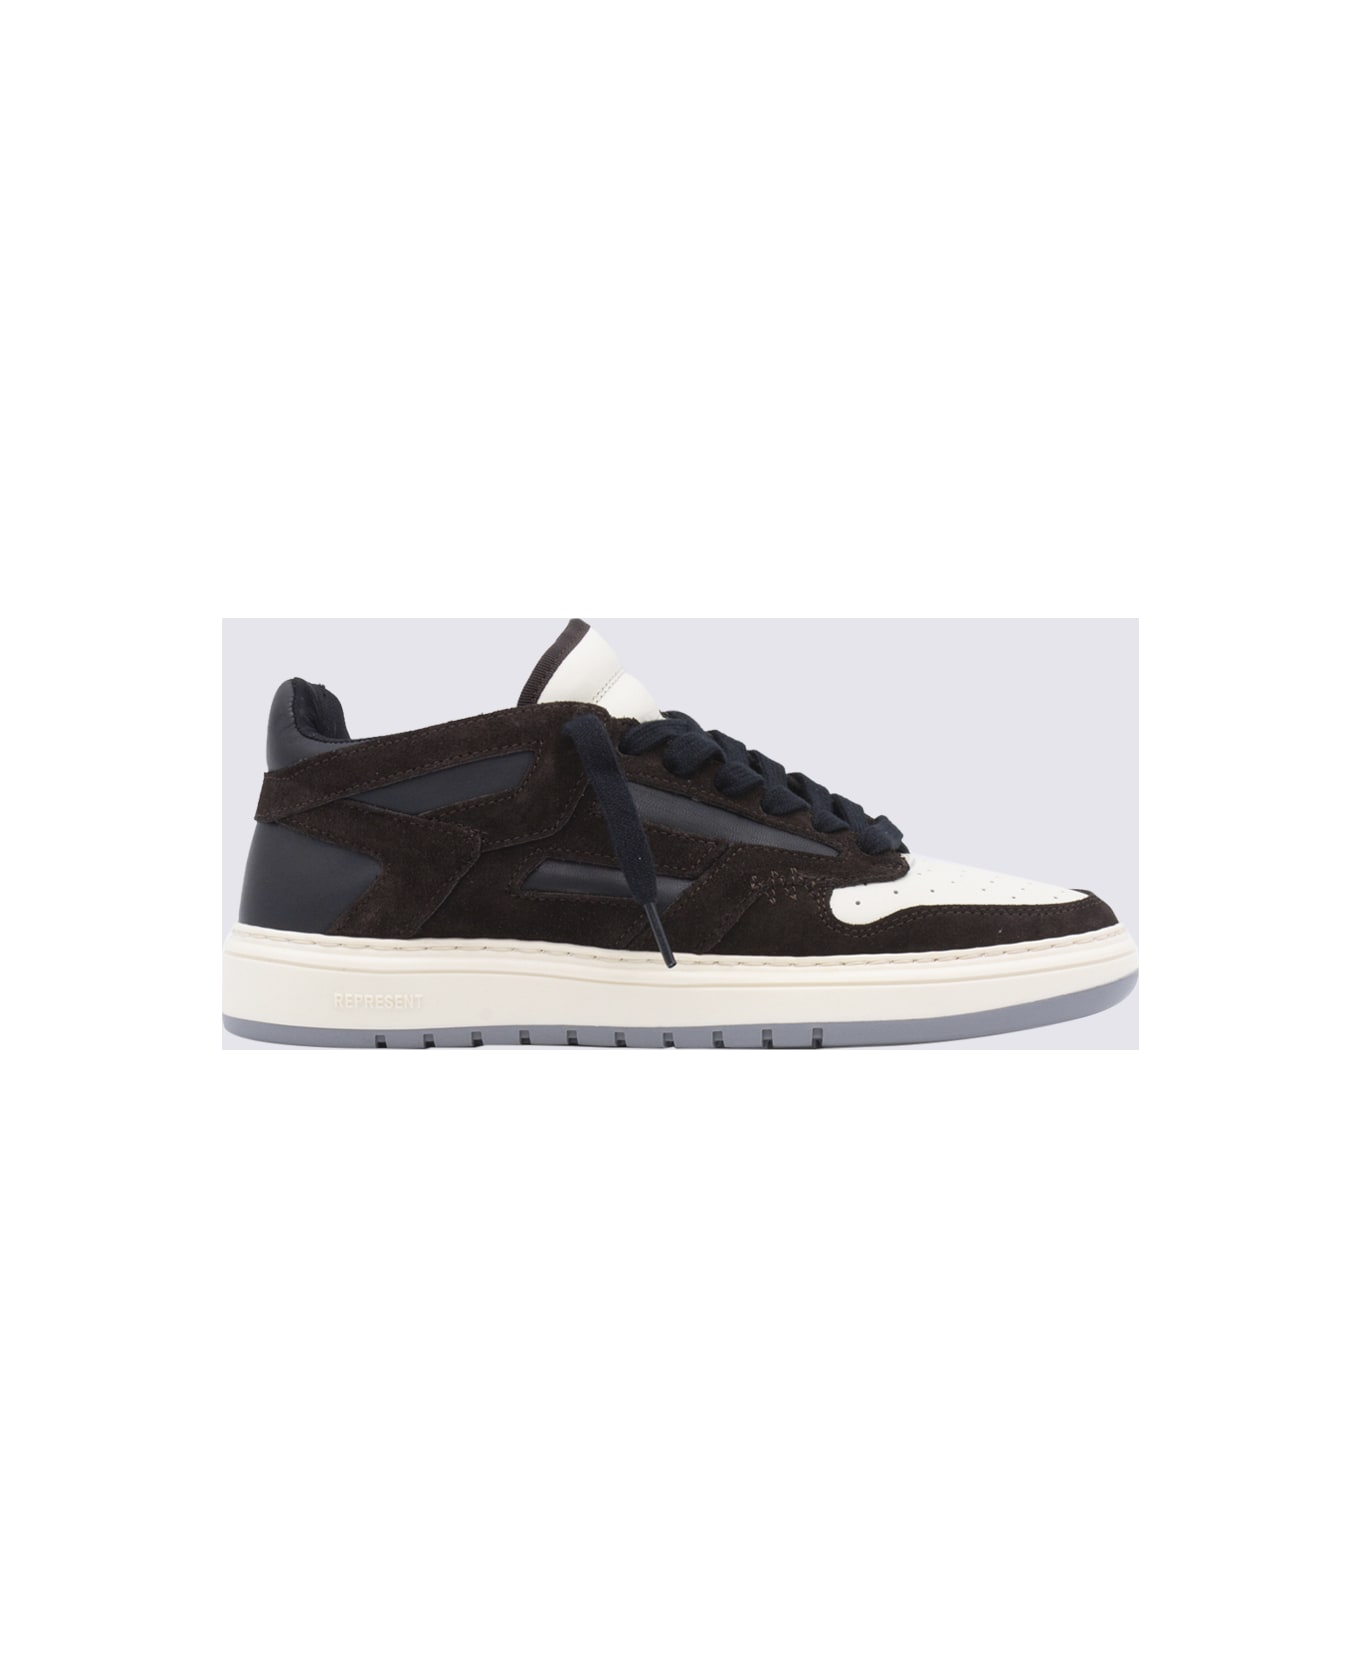 REPRESENT Brown-black Leather Sneakers - BROWN/BLACK